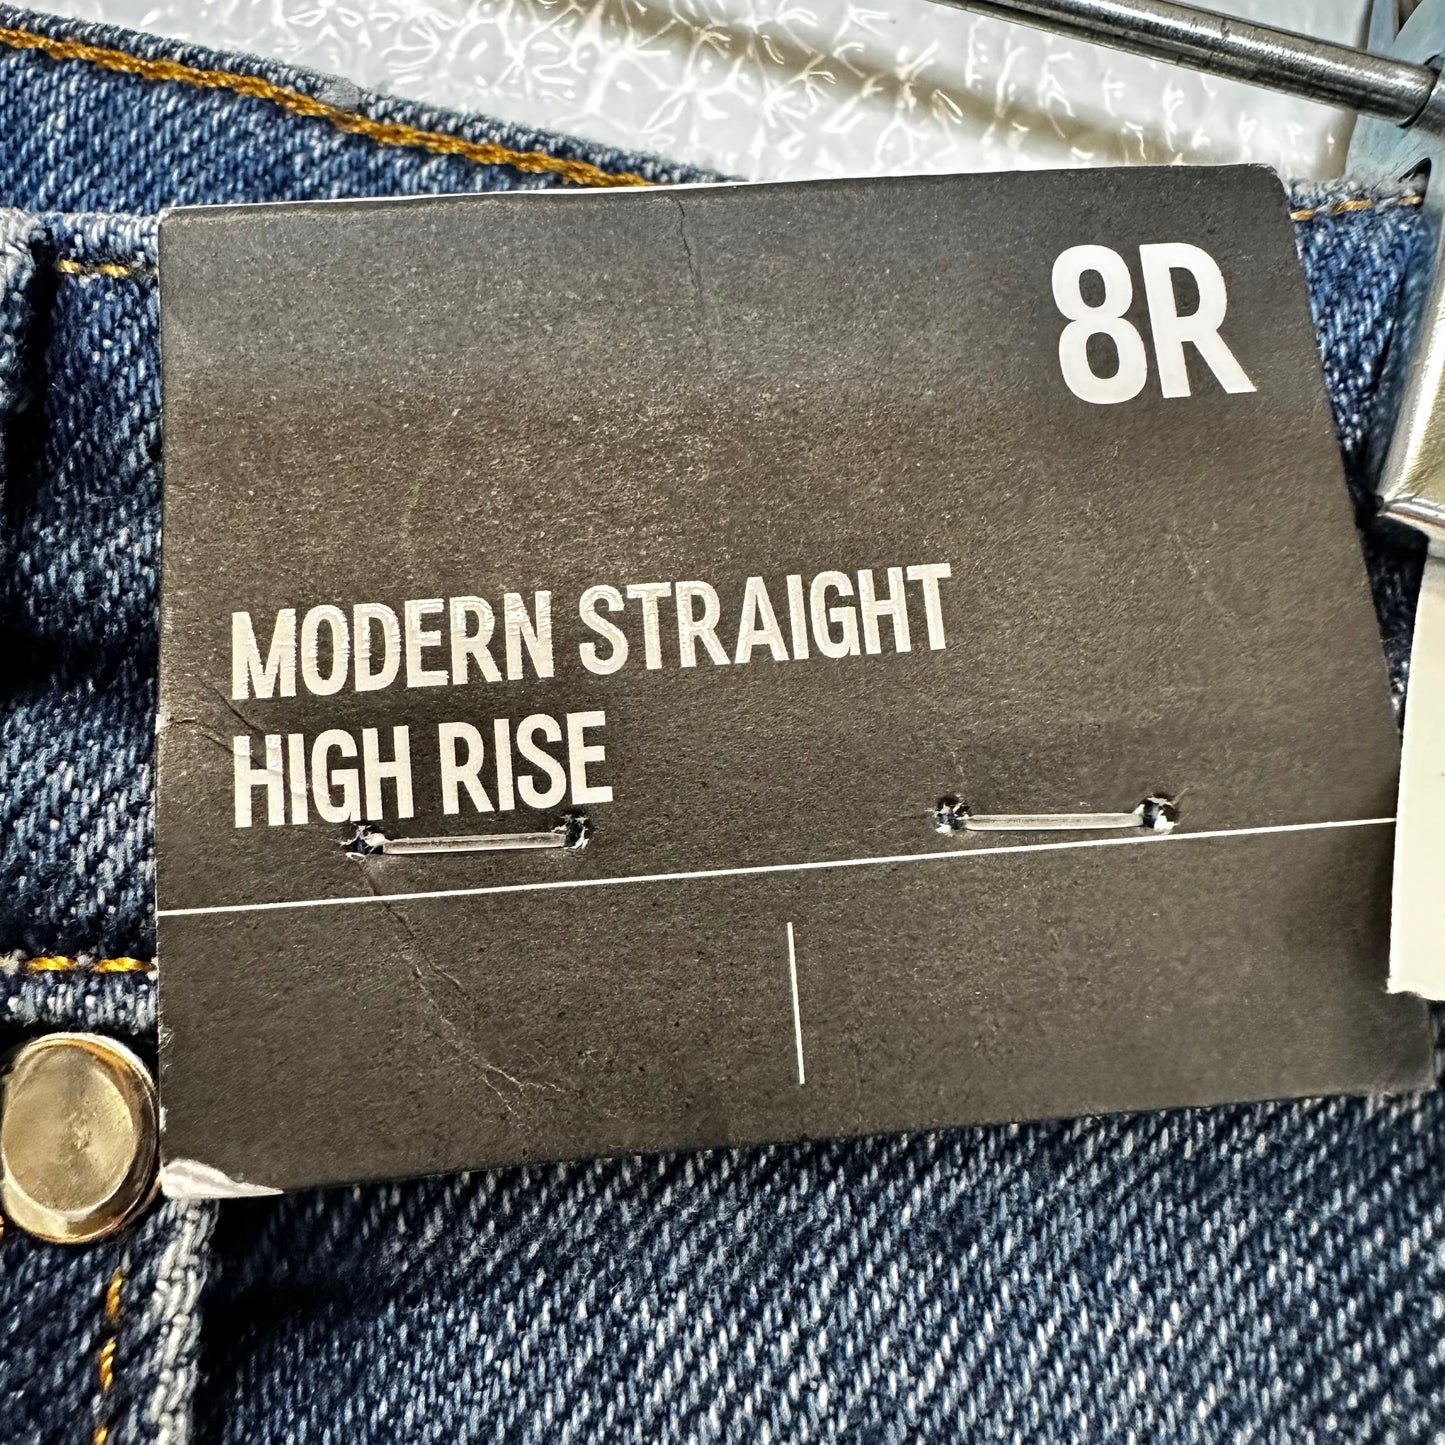 Denim Jeans Straight Express, Size 8